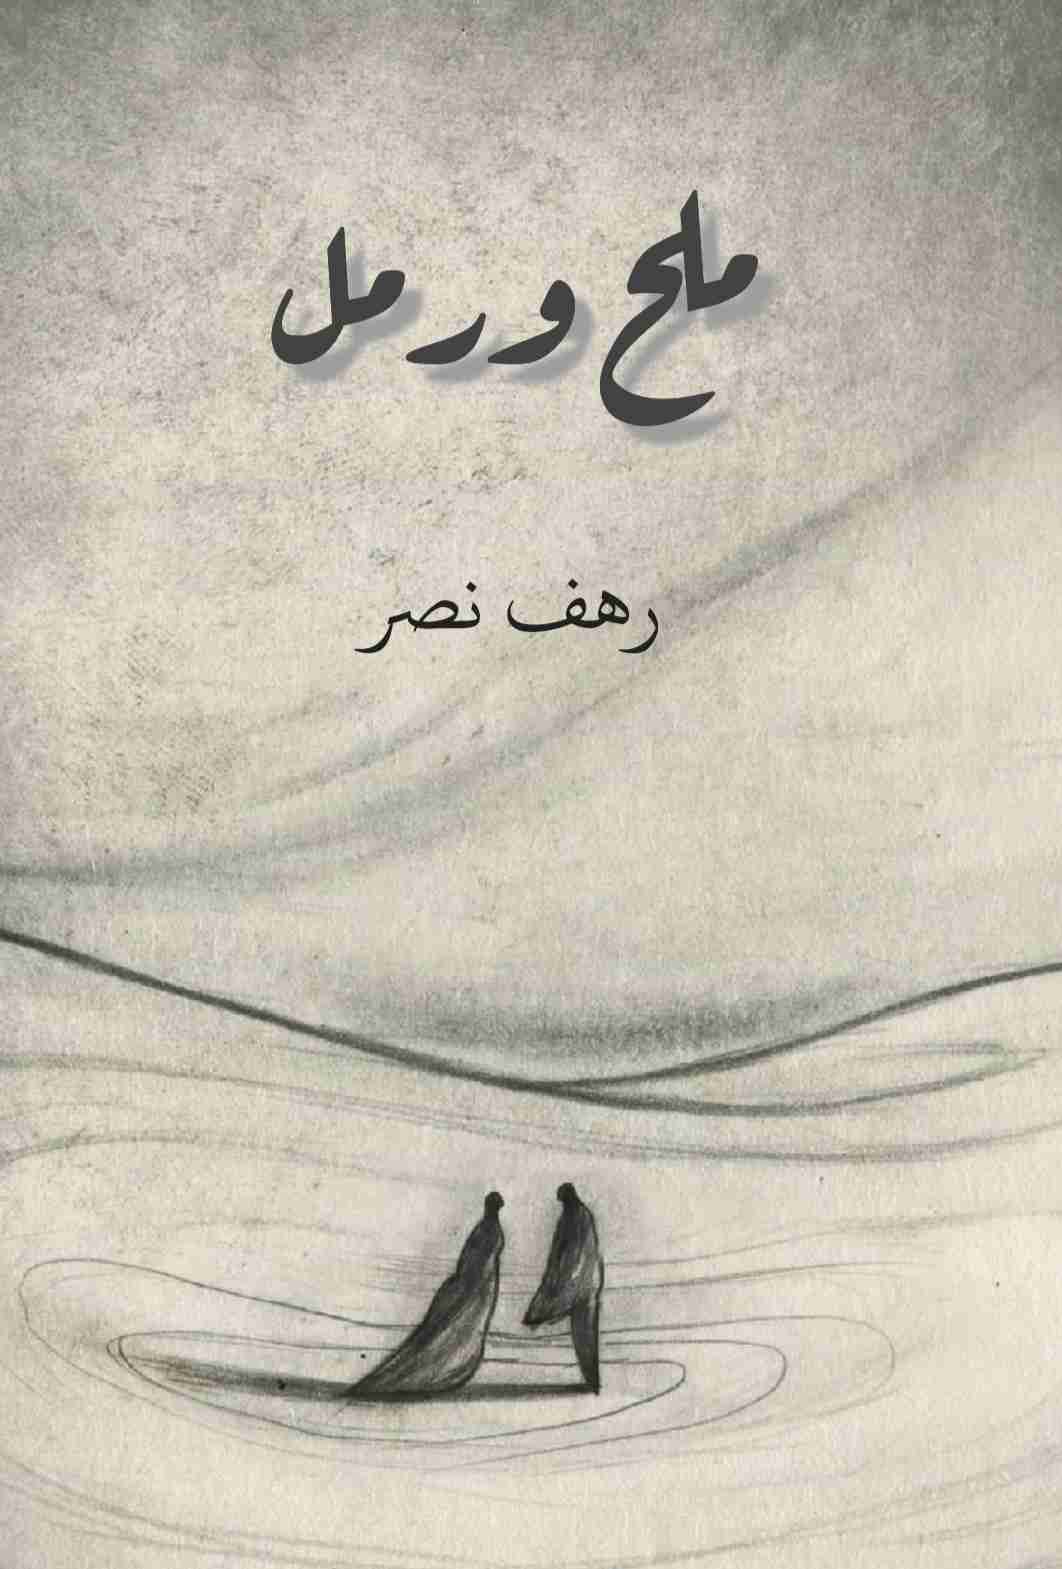 كتاب ملح ورمل لـ رهف نصر